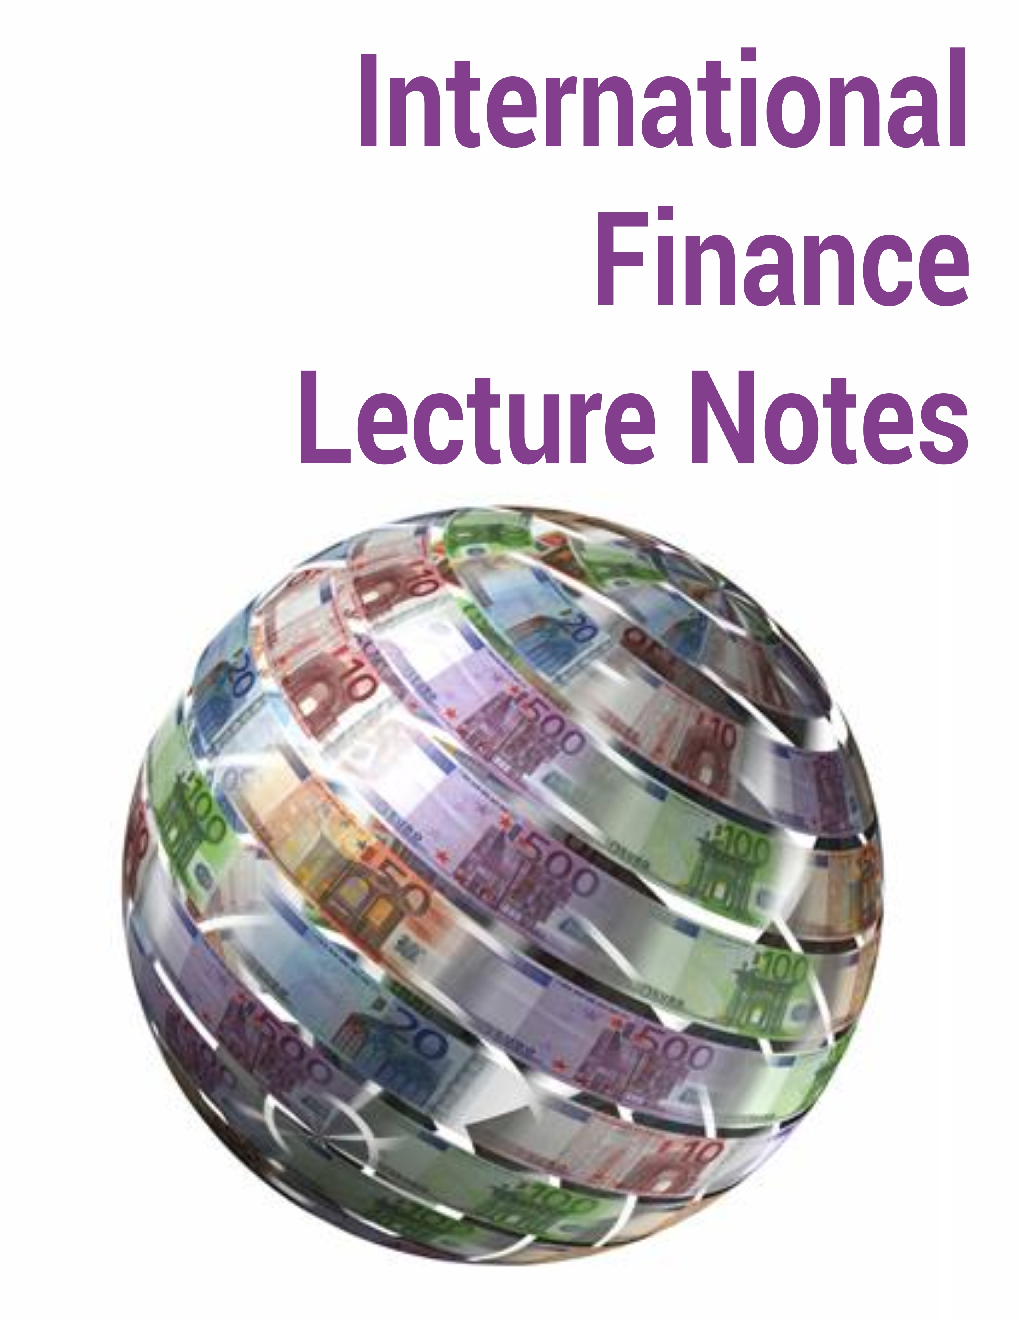 International finance pdf download free